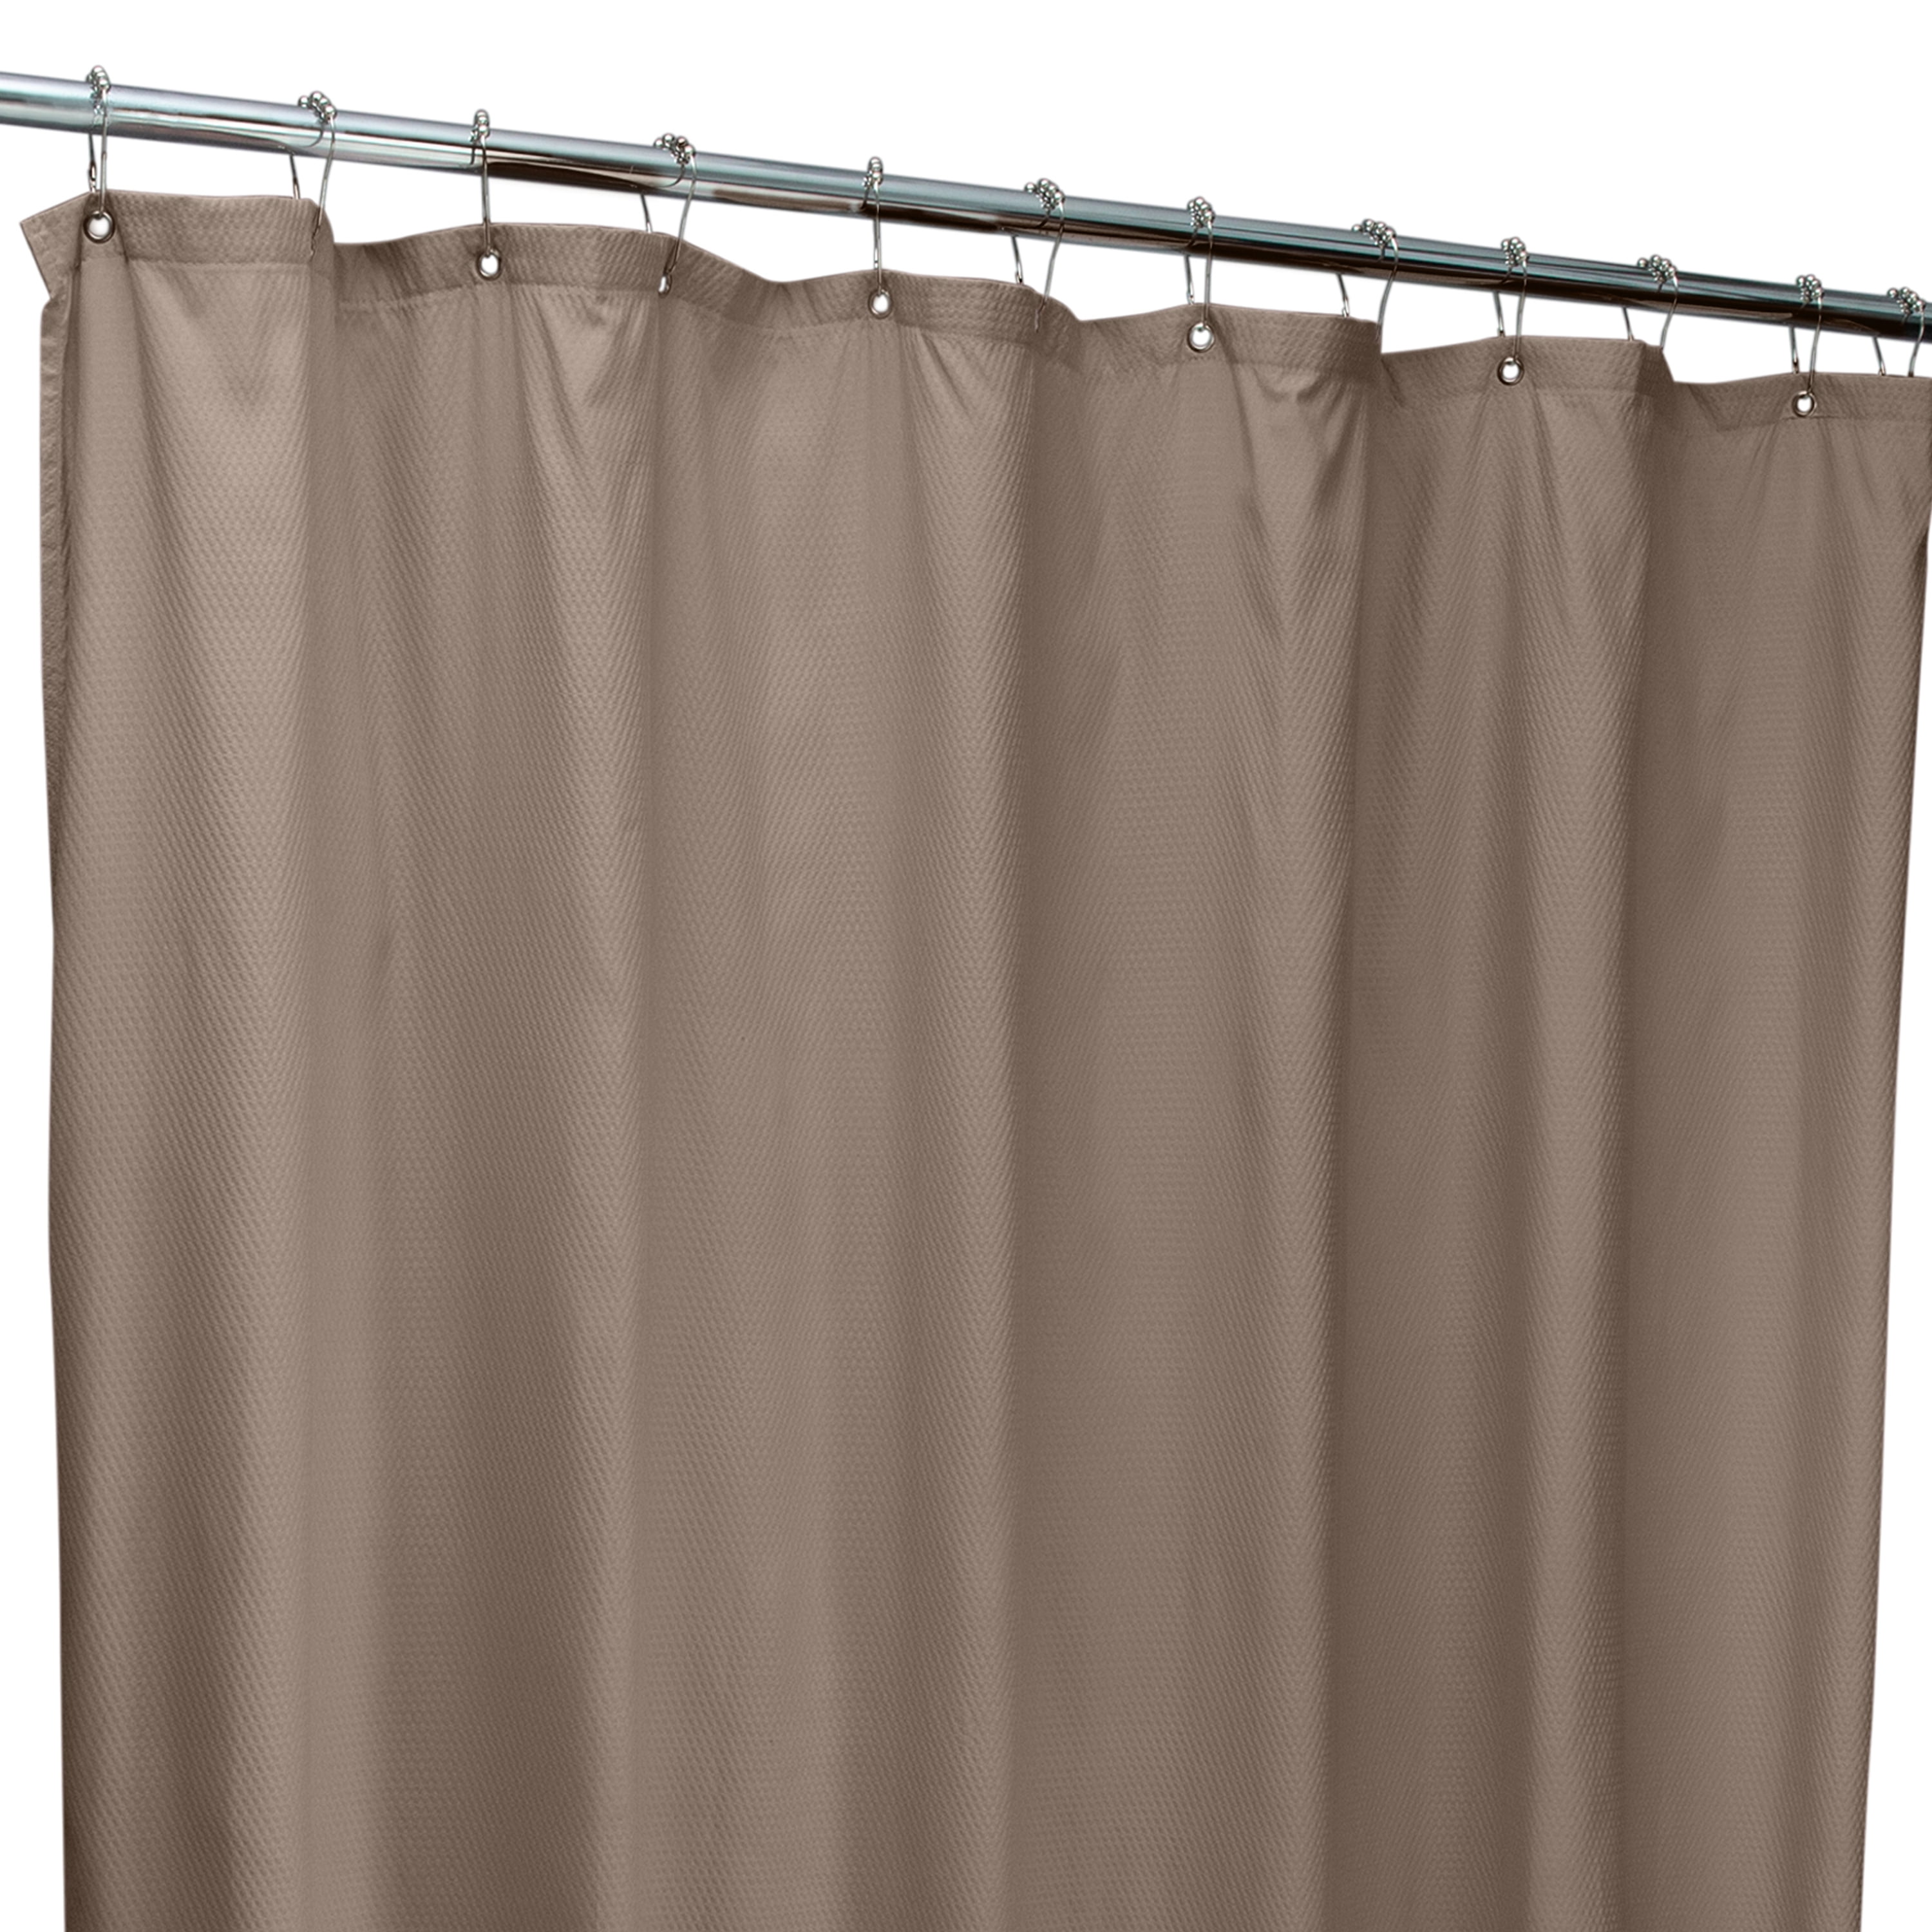 Diamond Lines Waterproof Bathroom Polyester Shower Curtain Liner Water Resistant 